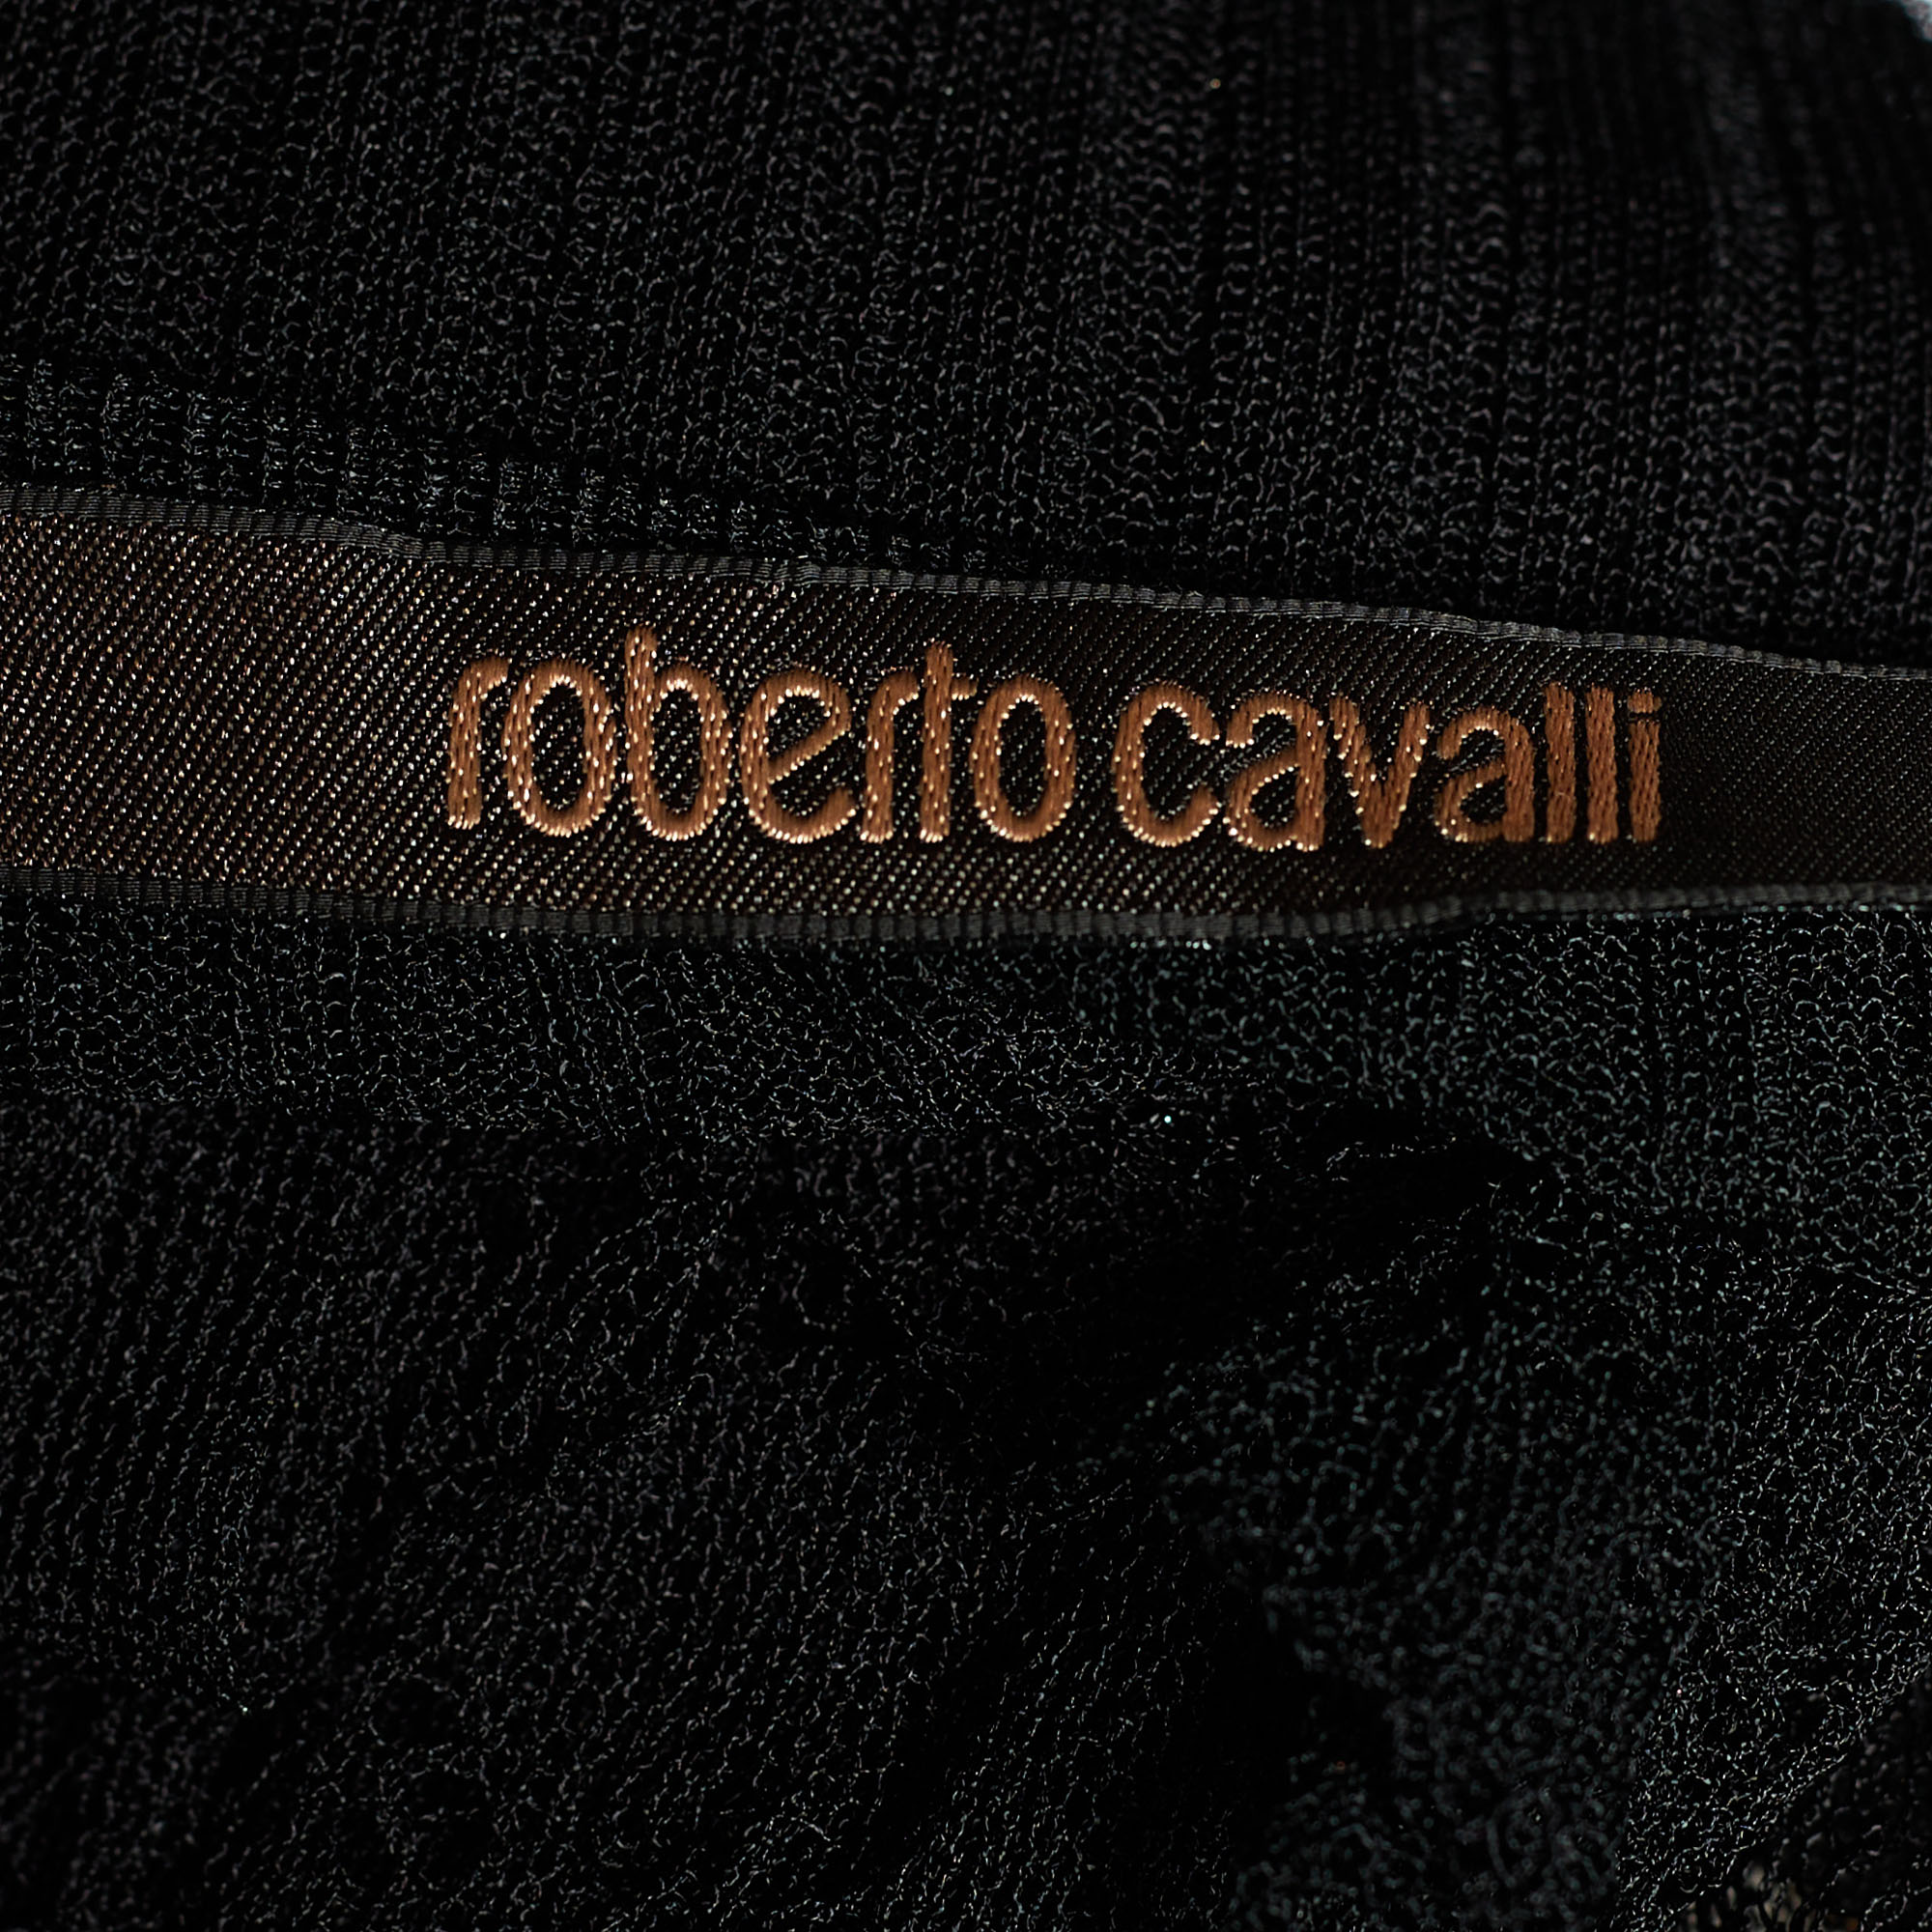 Roberto Cavalli Black Lace Frill Detail Sleeveless Top S